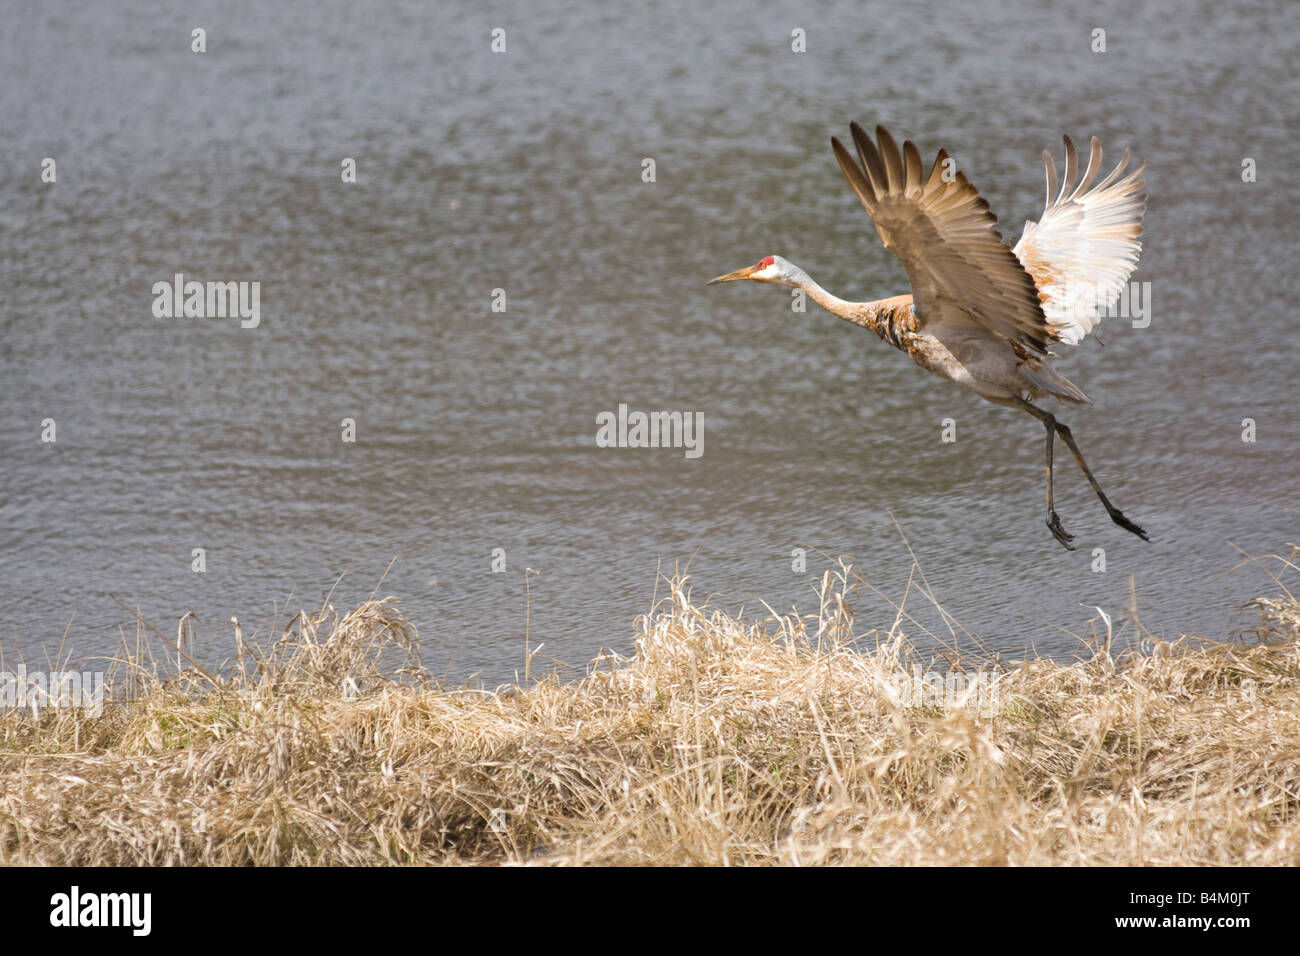 A sandhill crane near a small pond in central Wisconsin Stock Photo